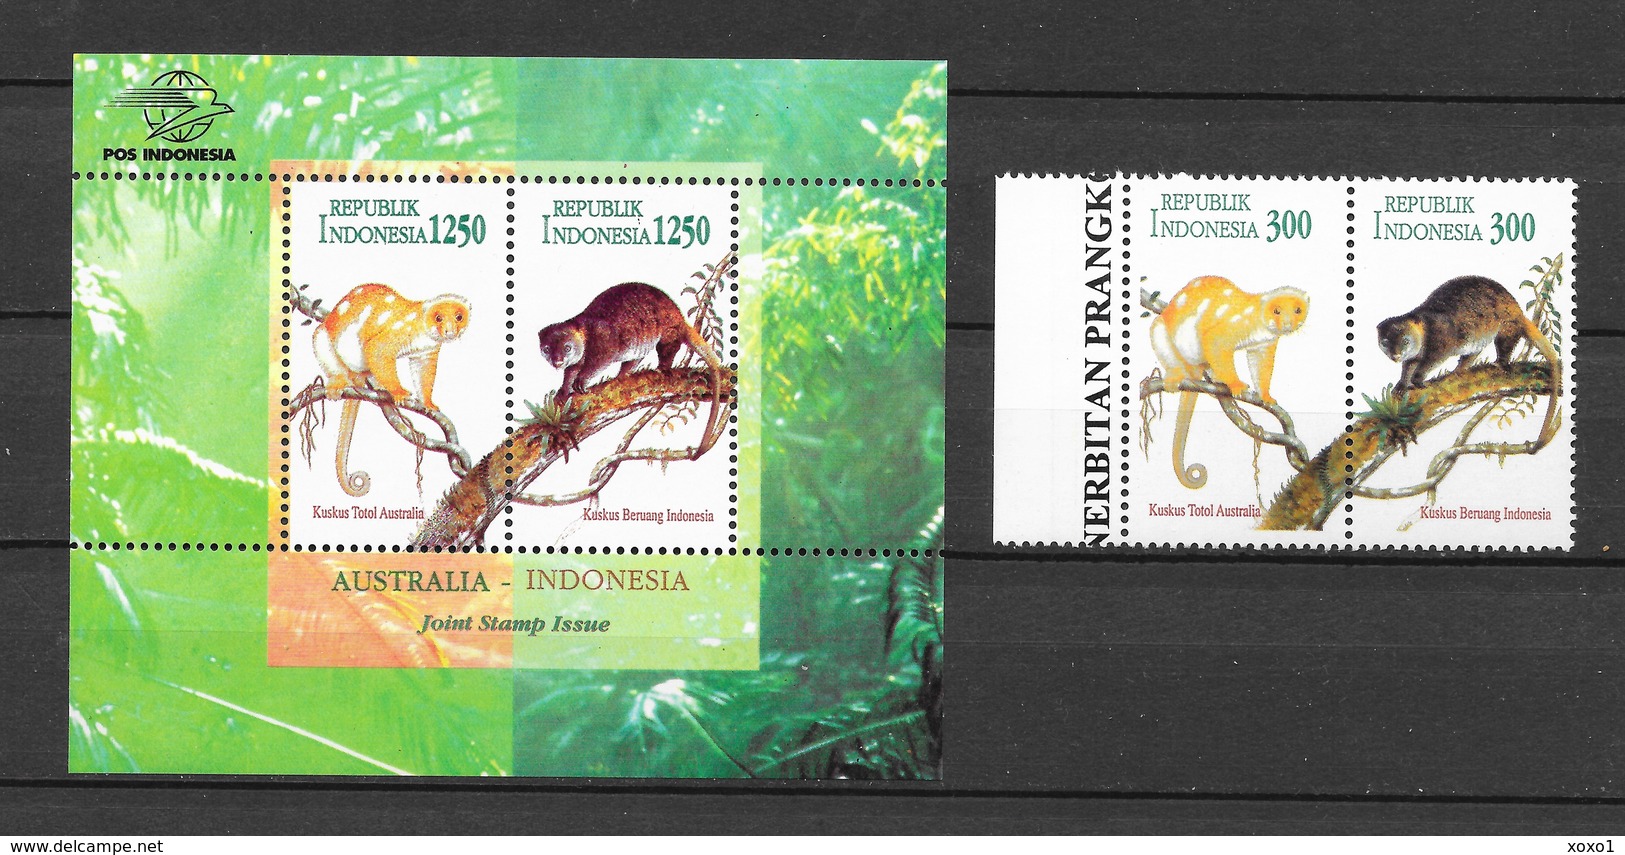 Indonesia 1996 MiNr. 1610 - 1613 (Block 108) Indonesien Animals Kuskus 2v + S\sh MNH**  4.20 € - Affen